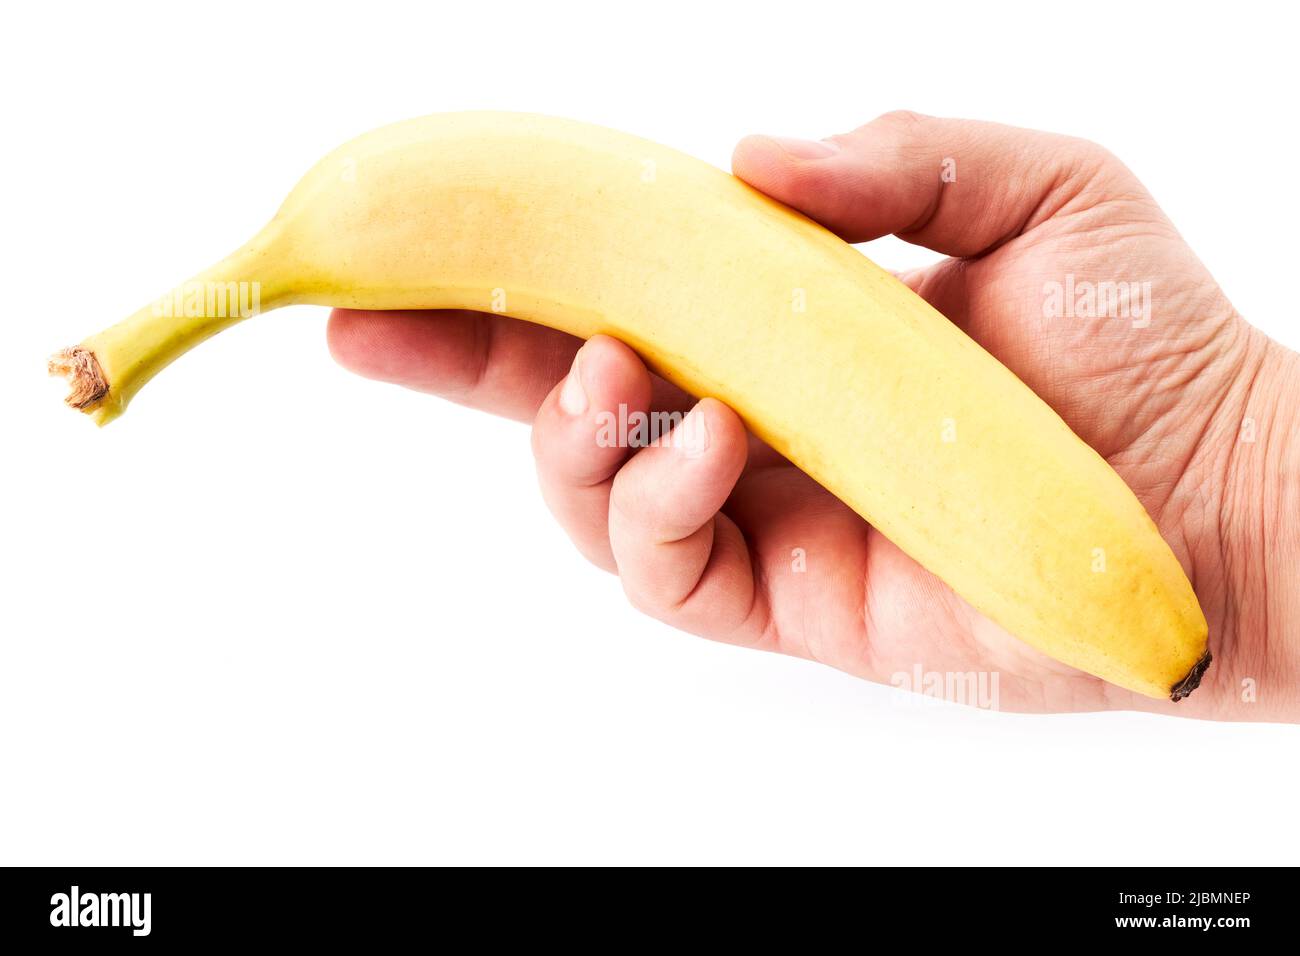 Hand of a man holding a ripe banana. Healthy food Stock Photo